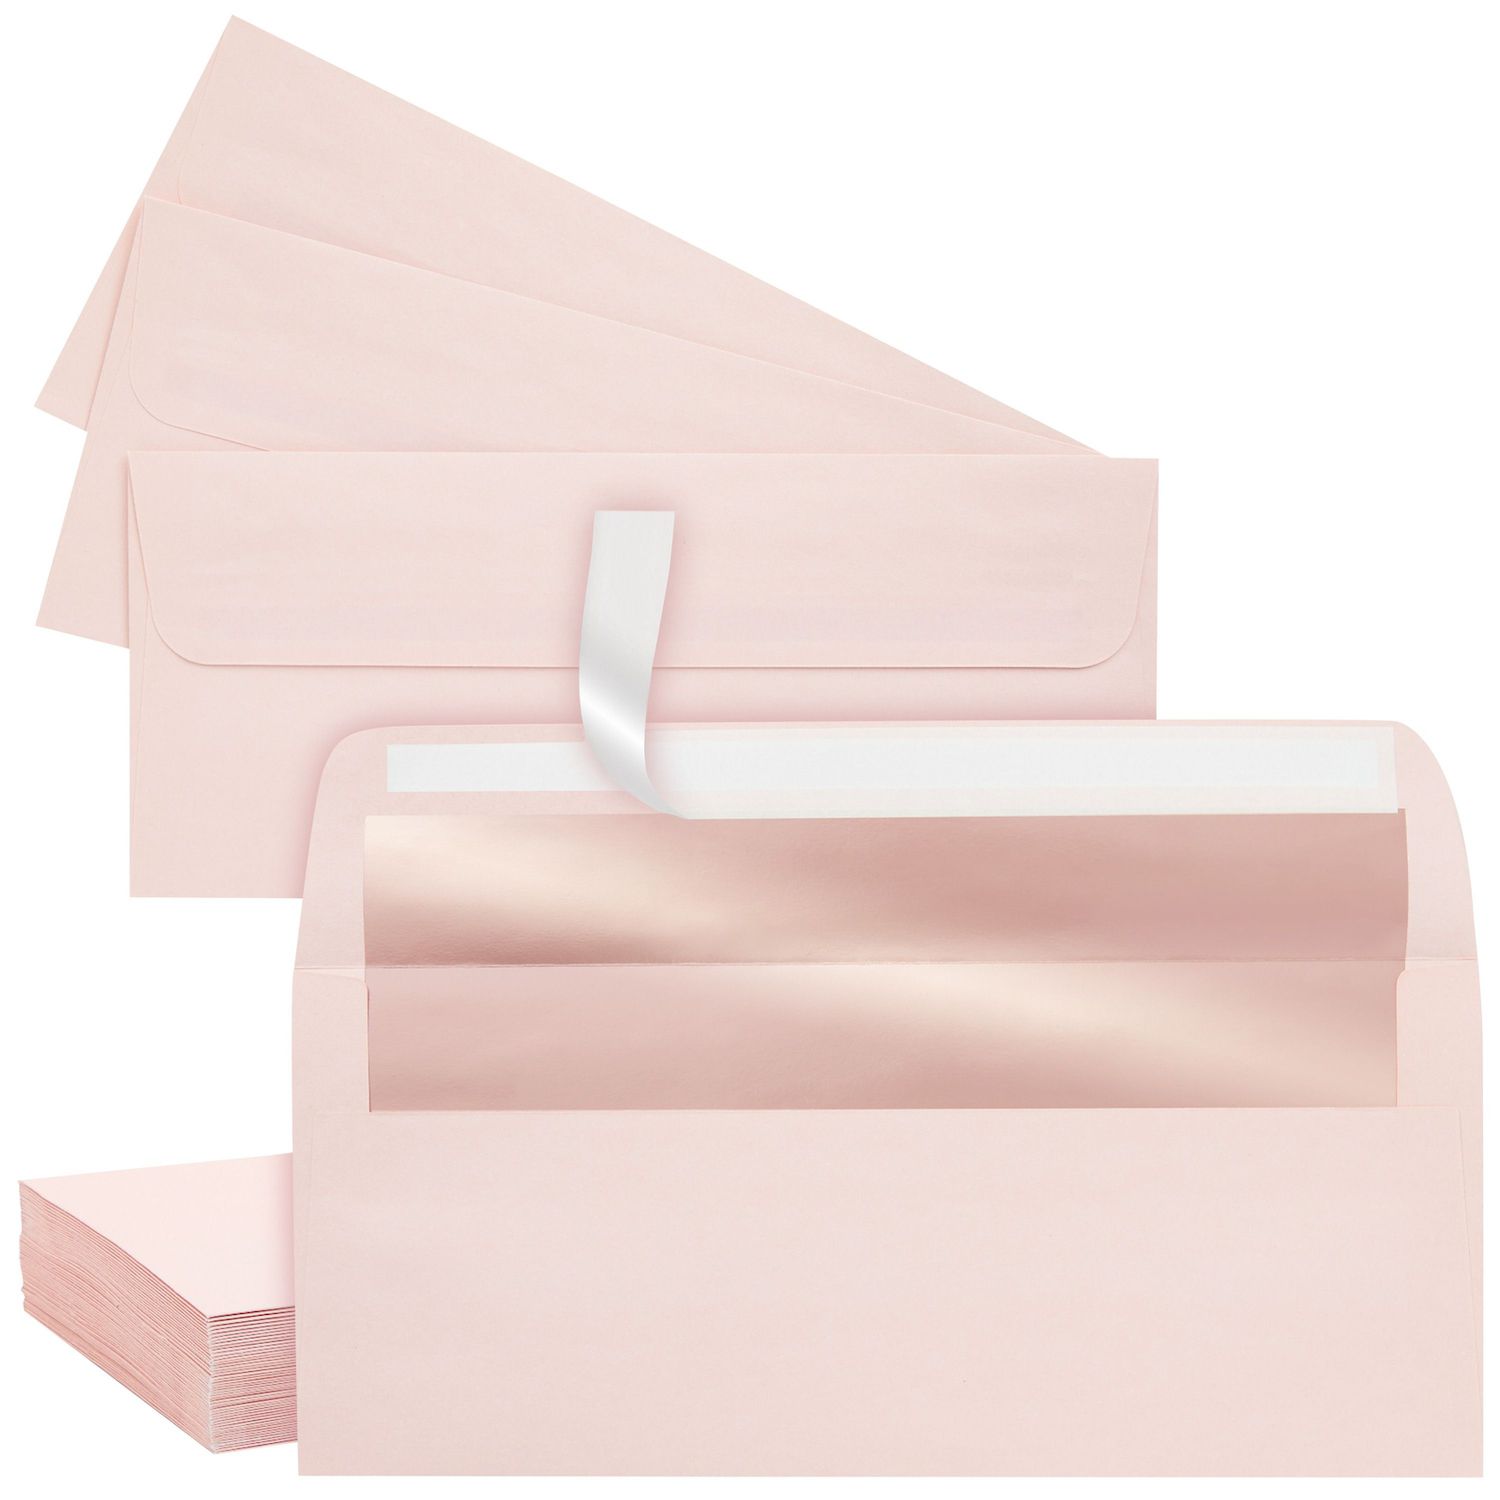  48-Pack Parchment Envelopes for Letters with Gummed